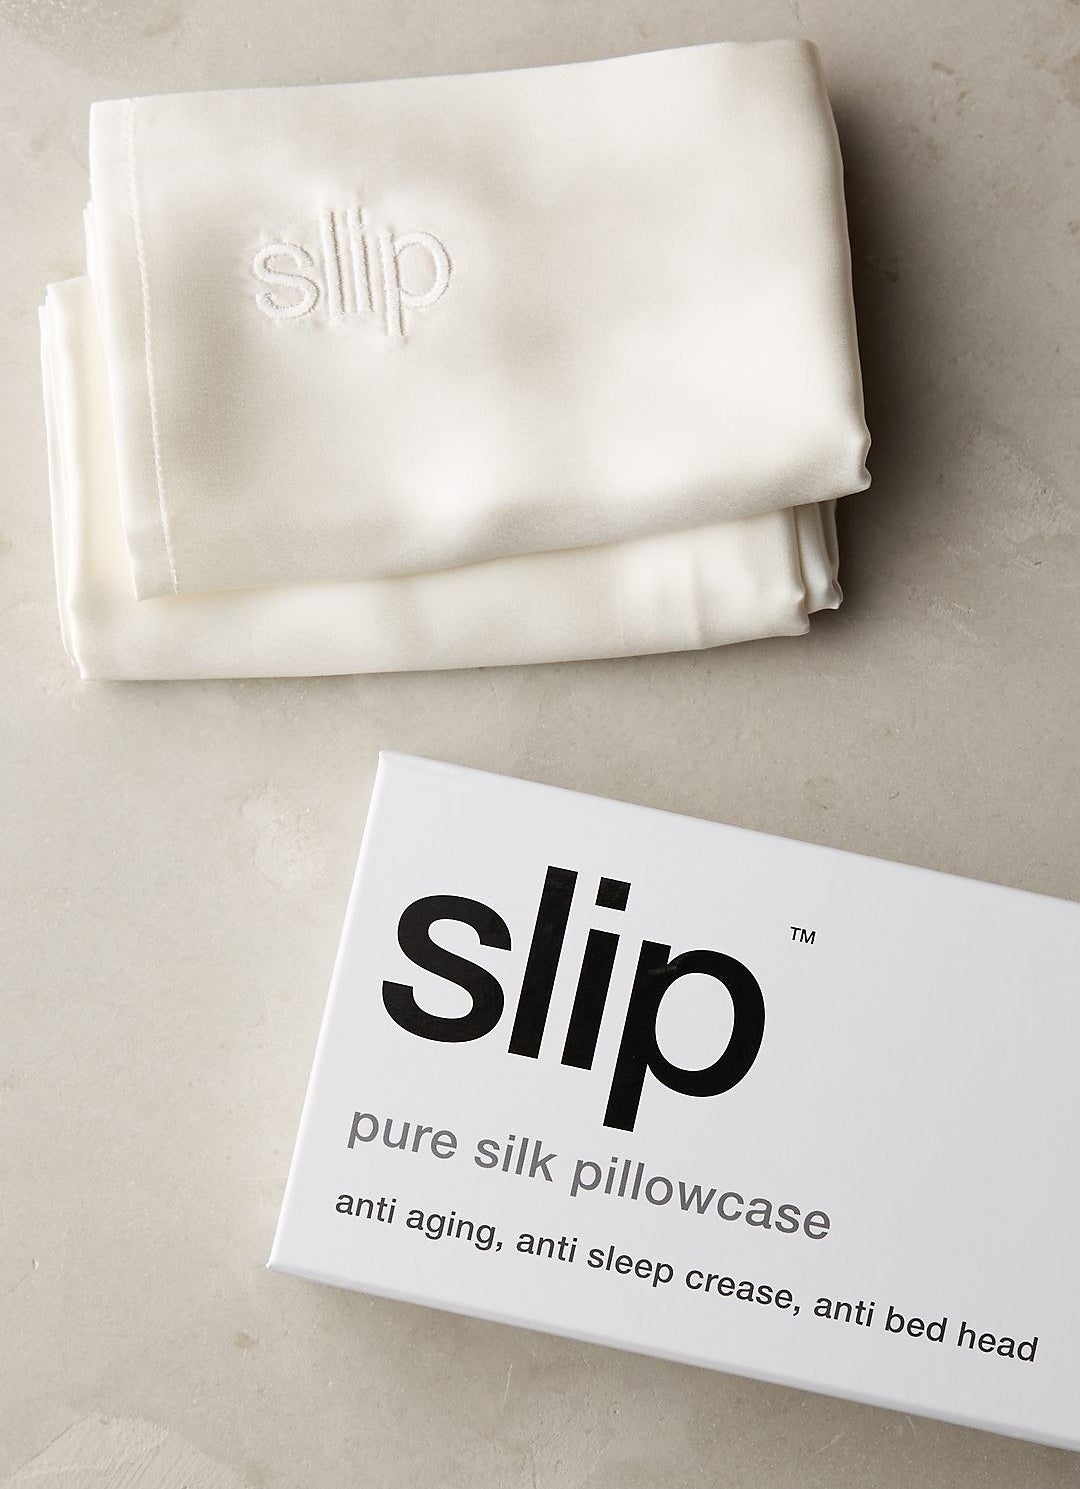 white slip silk pillowcase next to its box